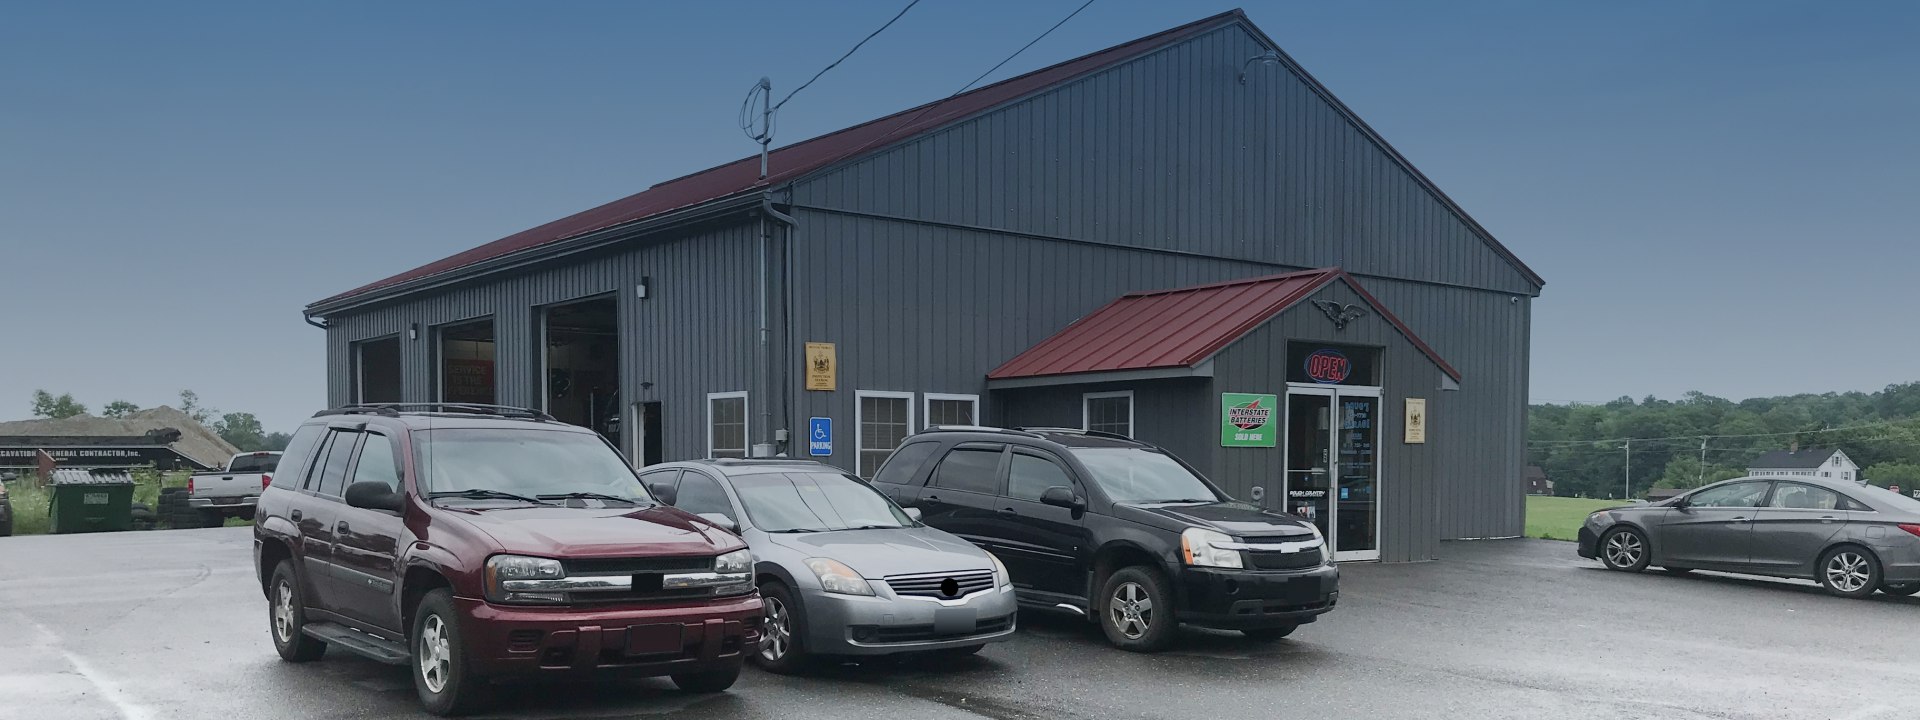 Benton Auto Repair Shop | Doug's Garage Inc